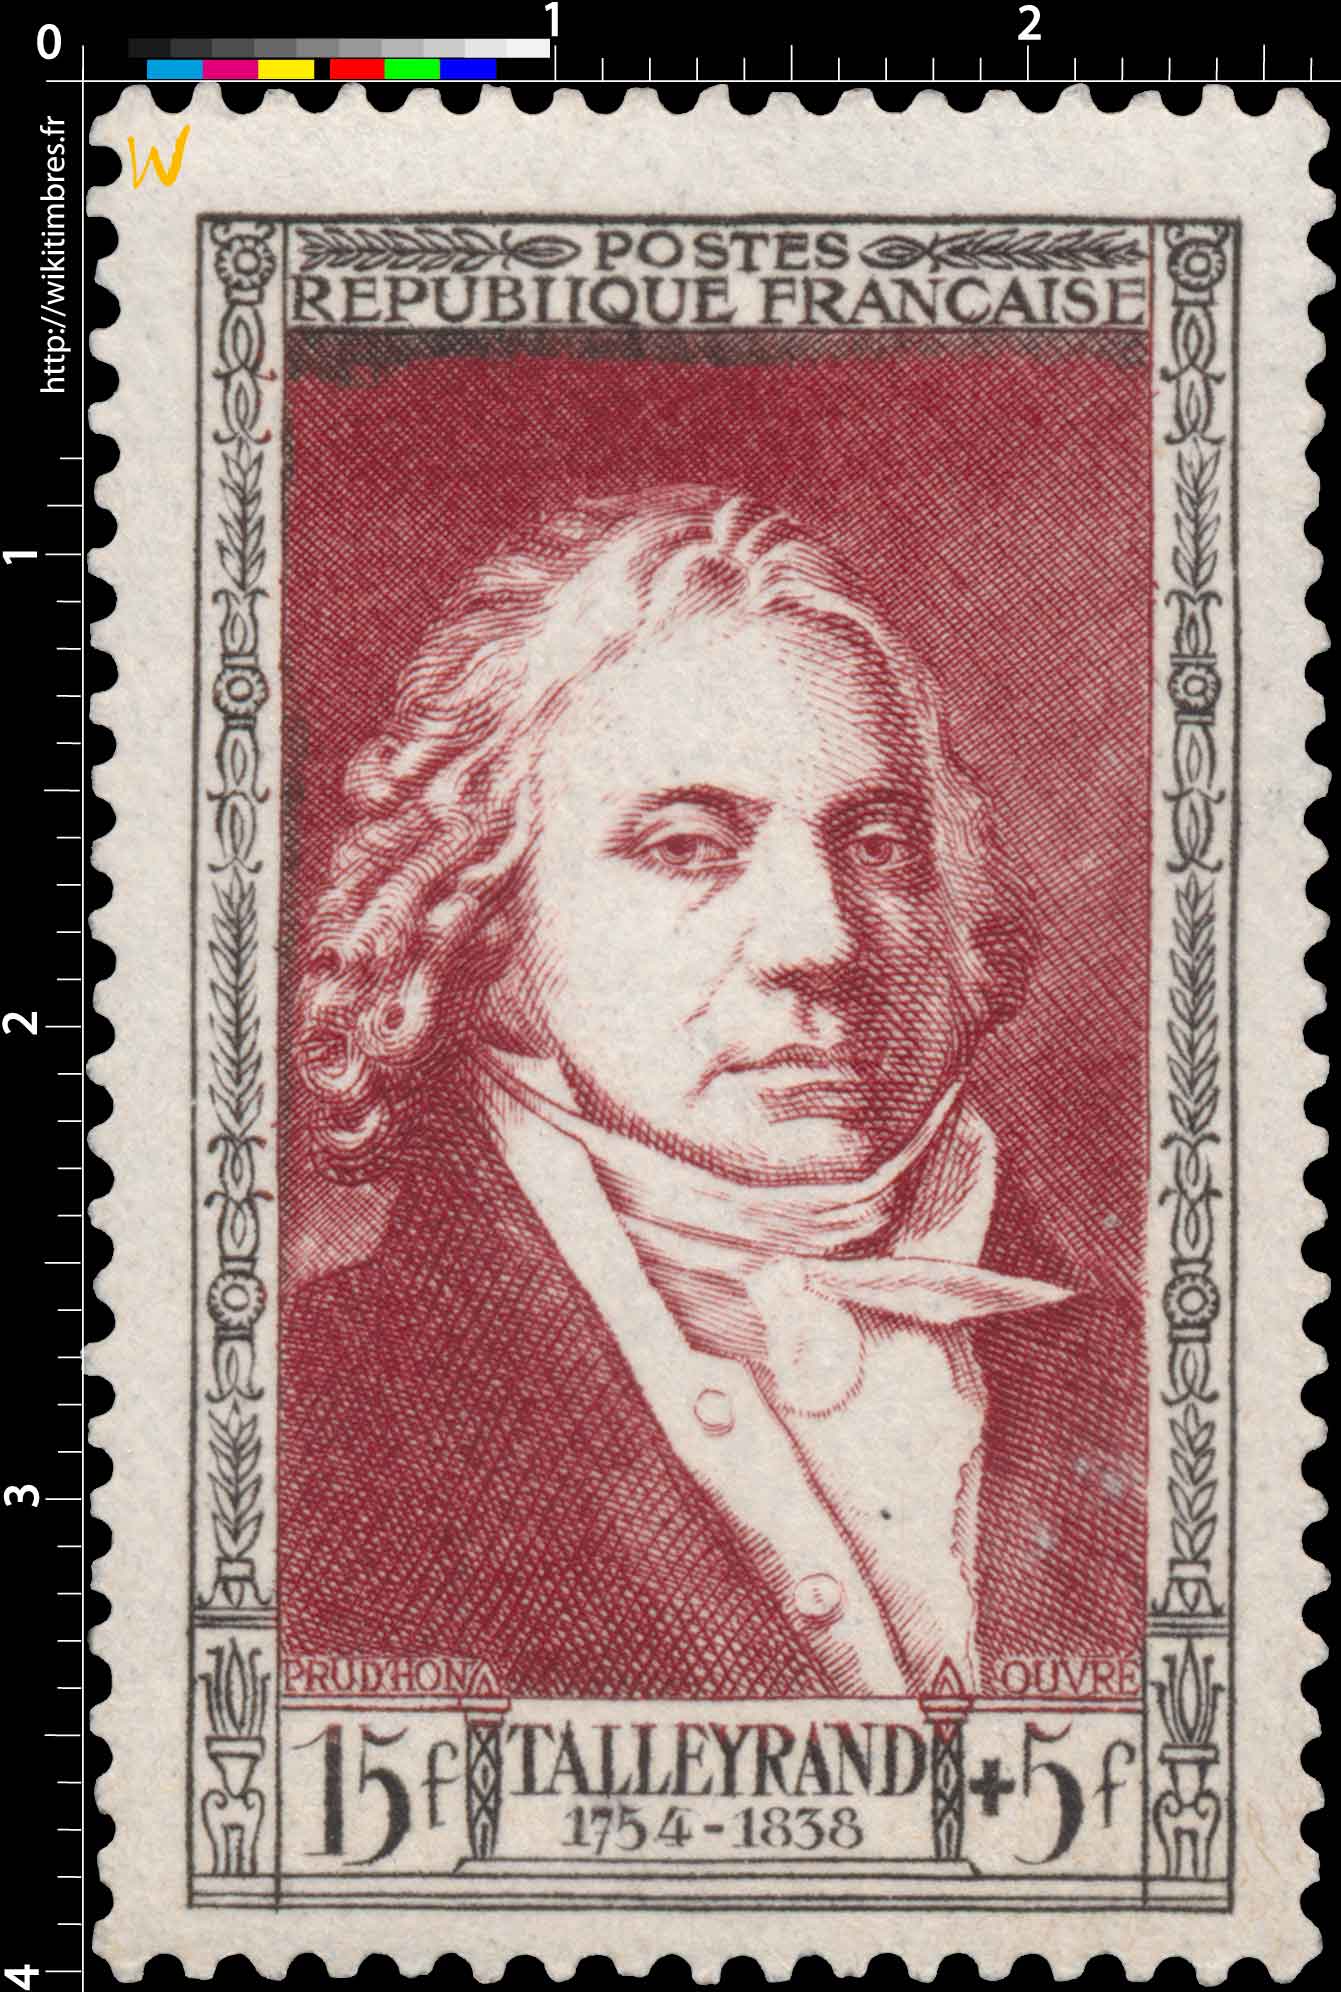 TALLEYRAND 1754-1838